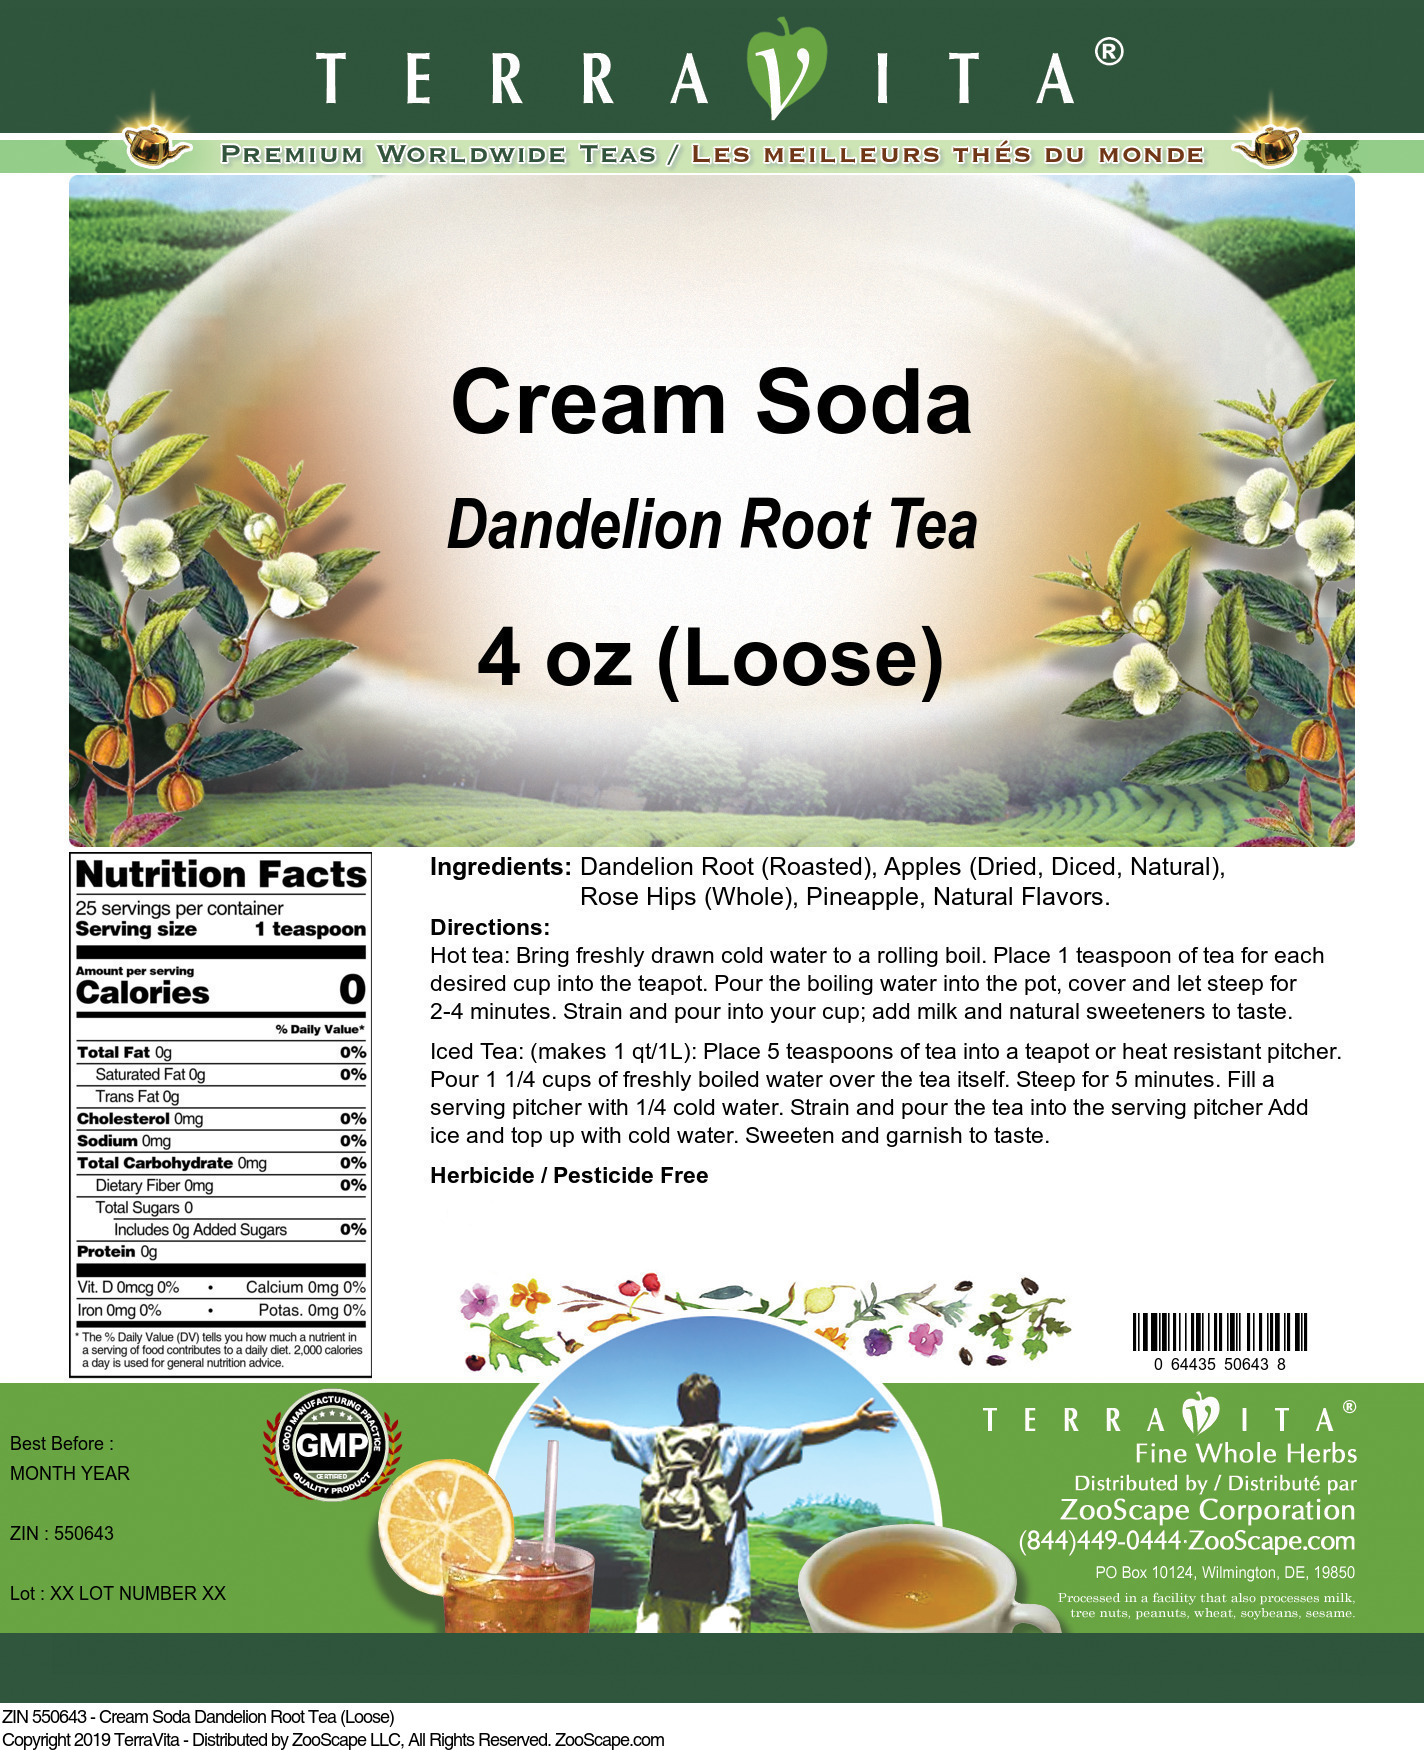 Cream Soda Dandelion Root Tea (Loose) - Label